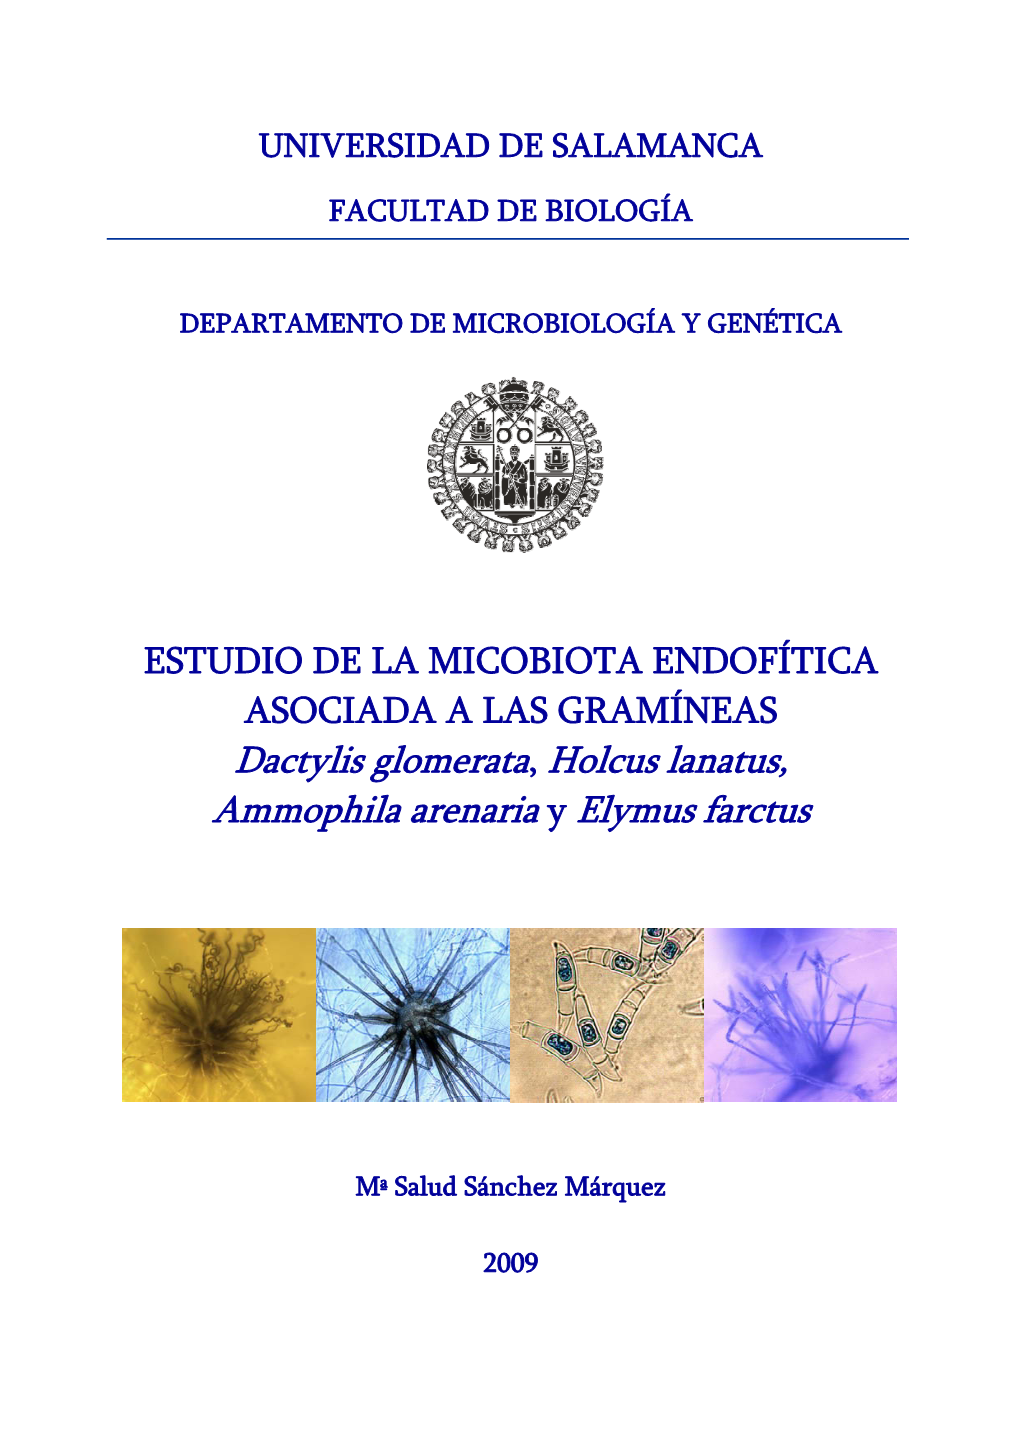 Dactylis Glomerata, Holcus Lanatus, Ammophila Arenaria Y Elymus Farctus